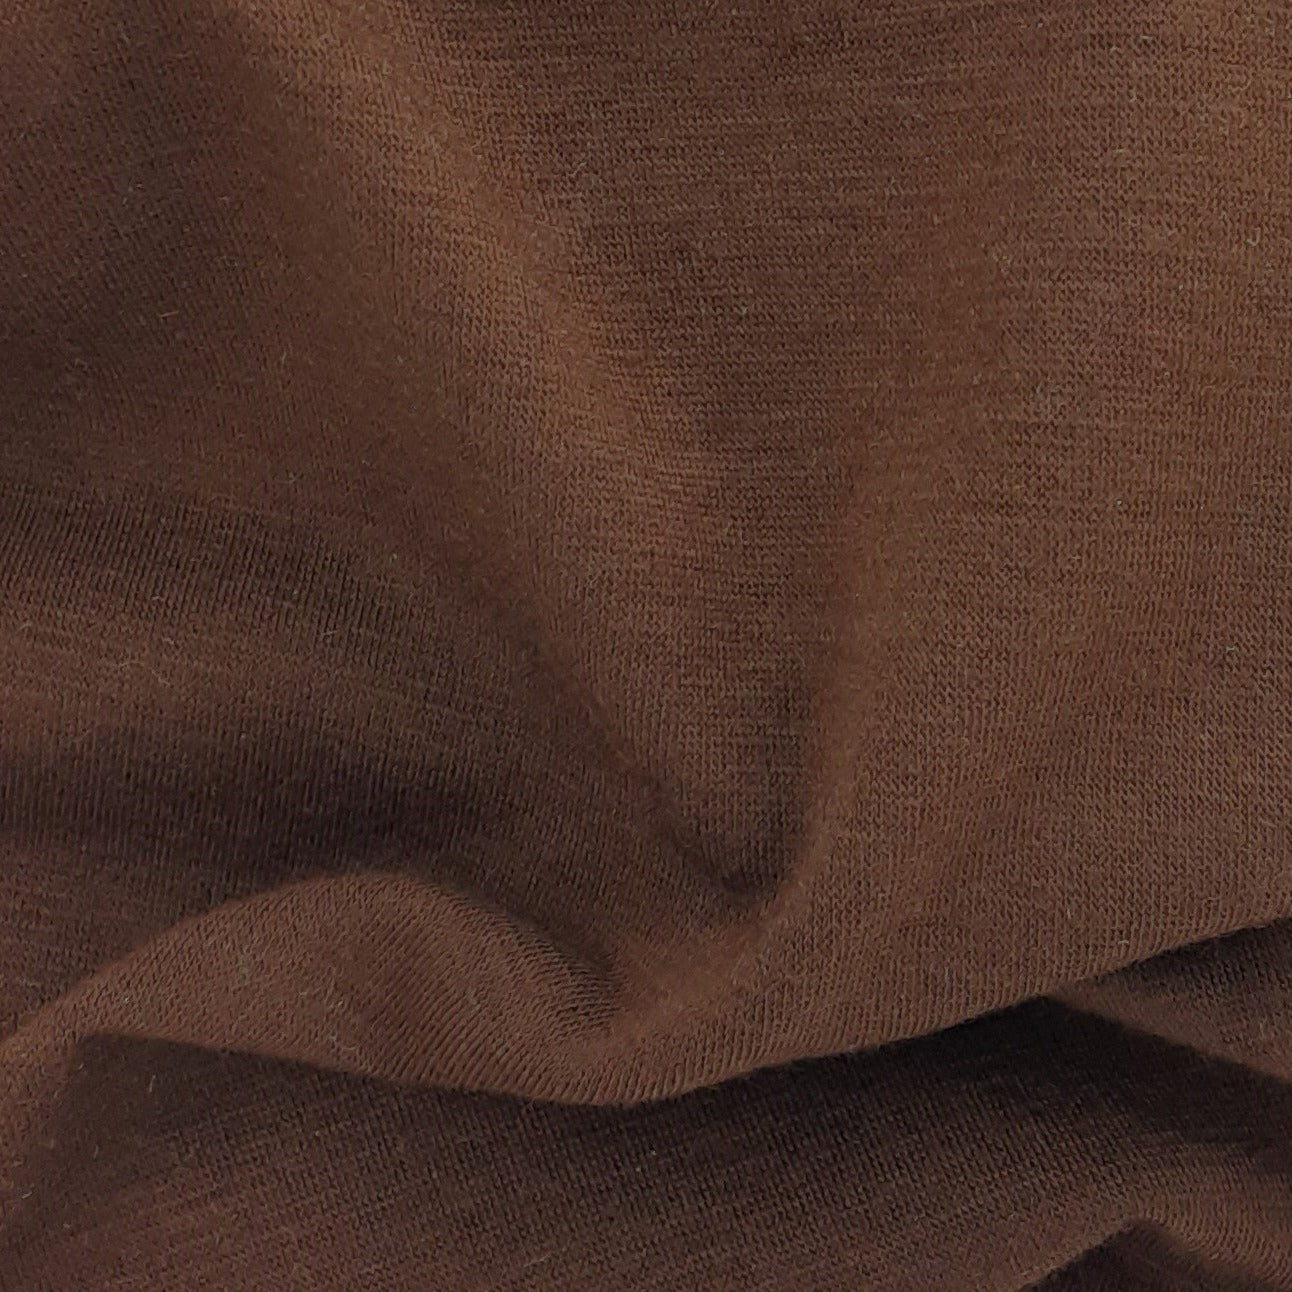 Brown #U5 Jersey P|R|S 200 Gram Knit Fabric - SKU 6923D